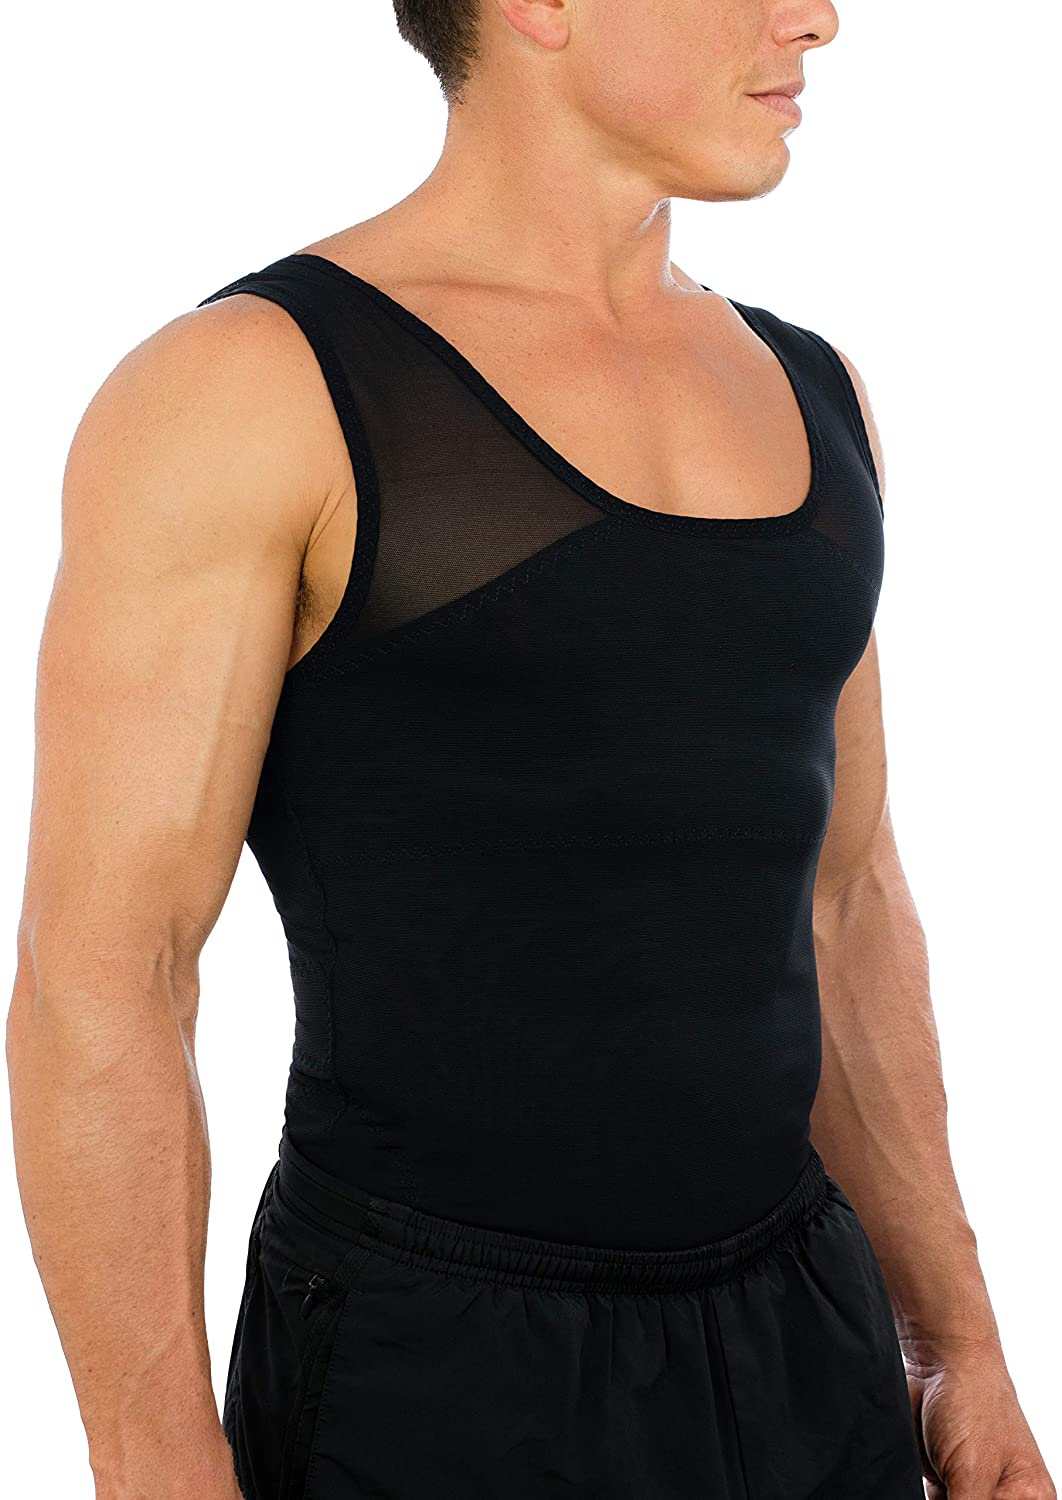 mens compression shirt to hide nipples